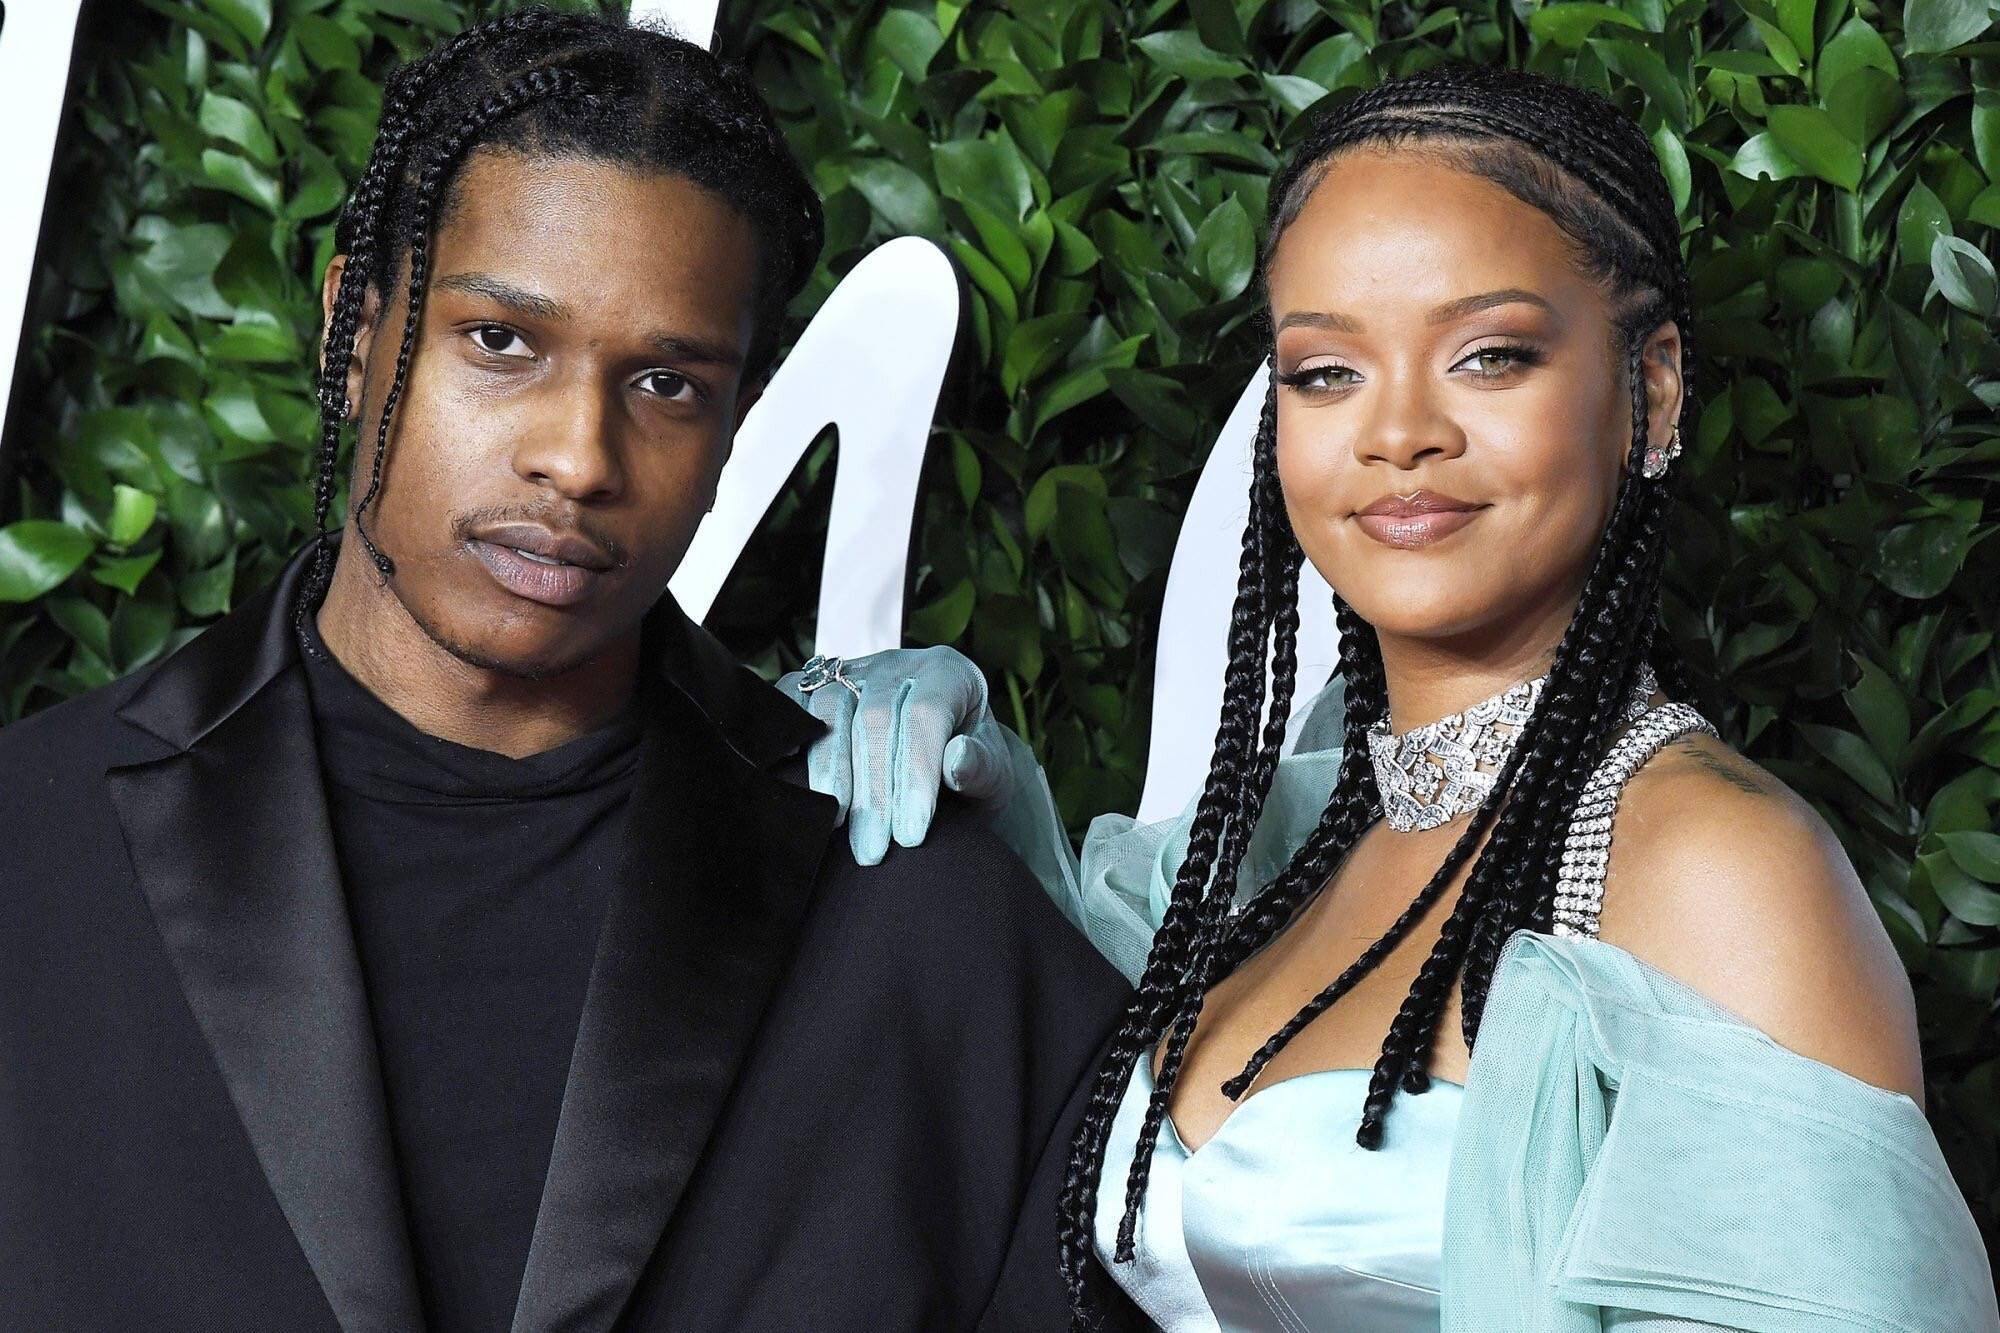 ASAP Rocky confirms he is dating Rihanna